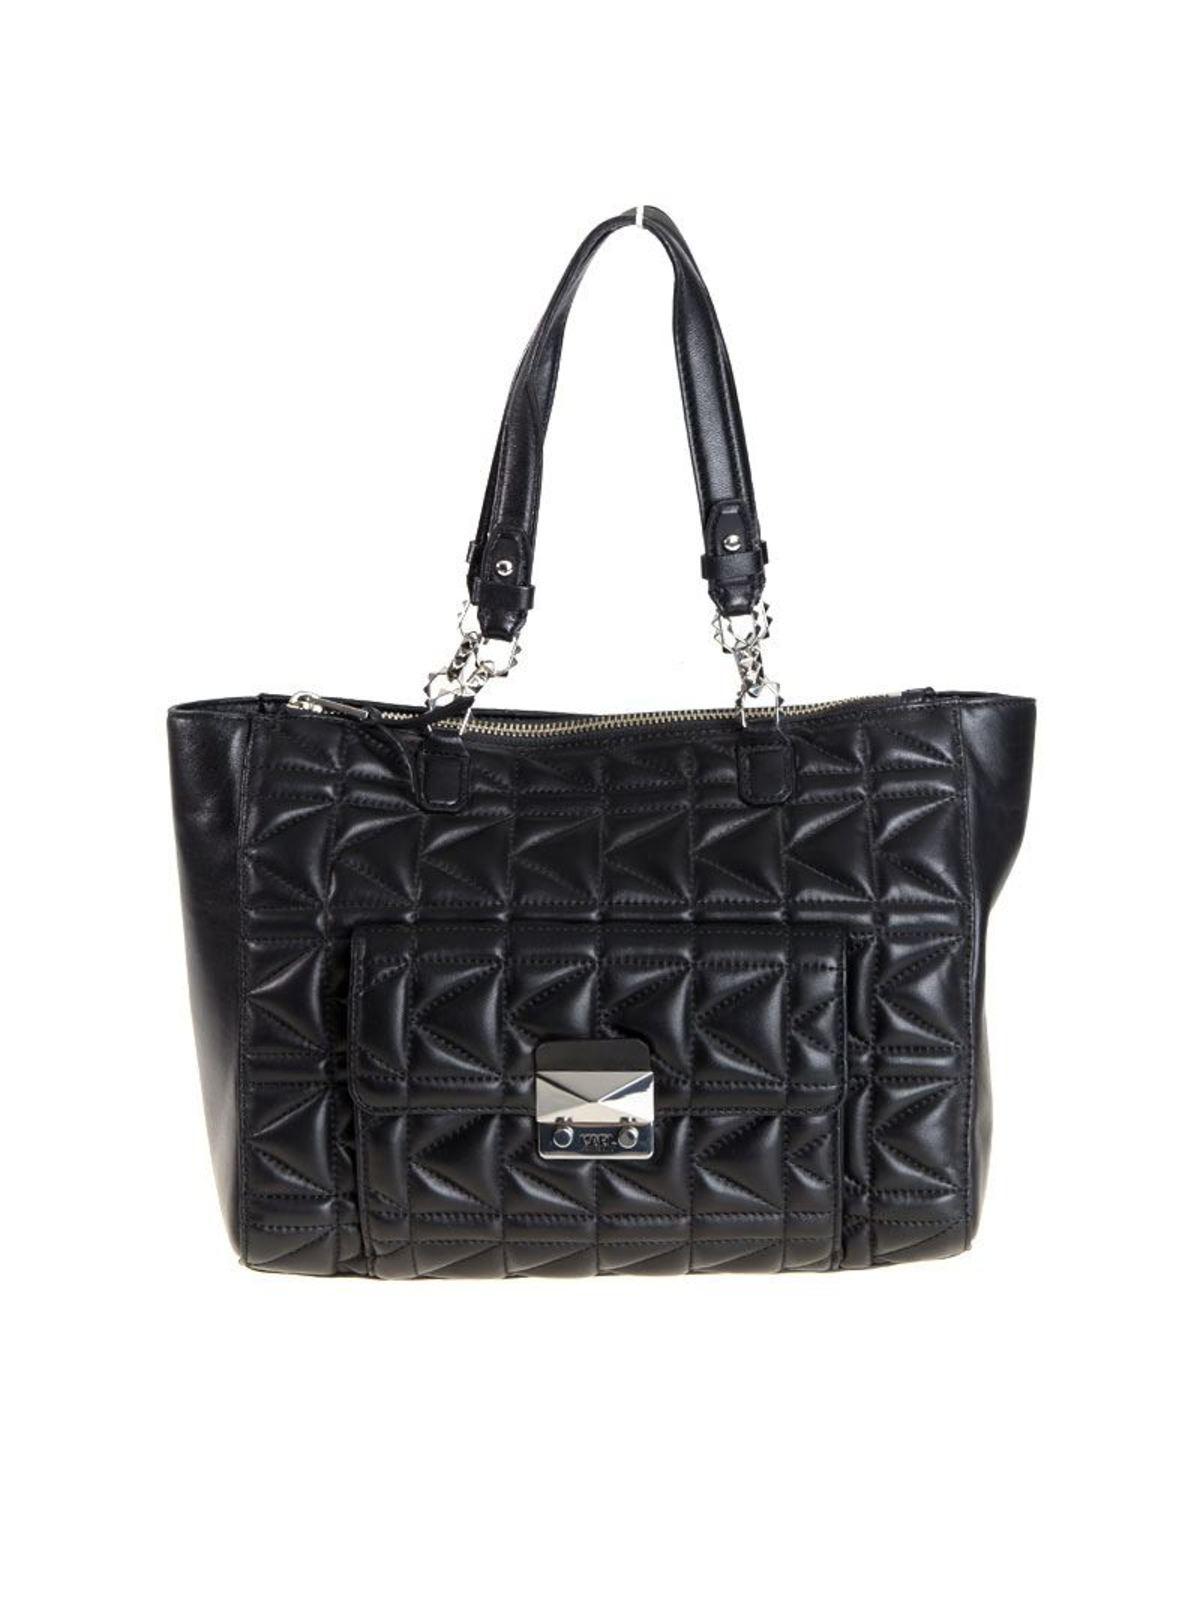 Karl Lagerfeld Leather Bag in Black - Lyst